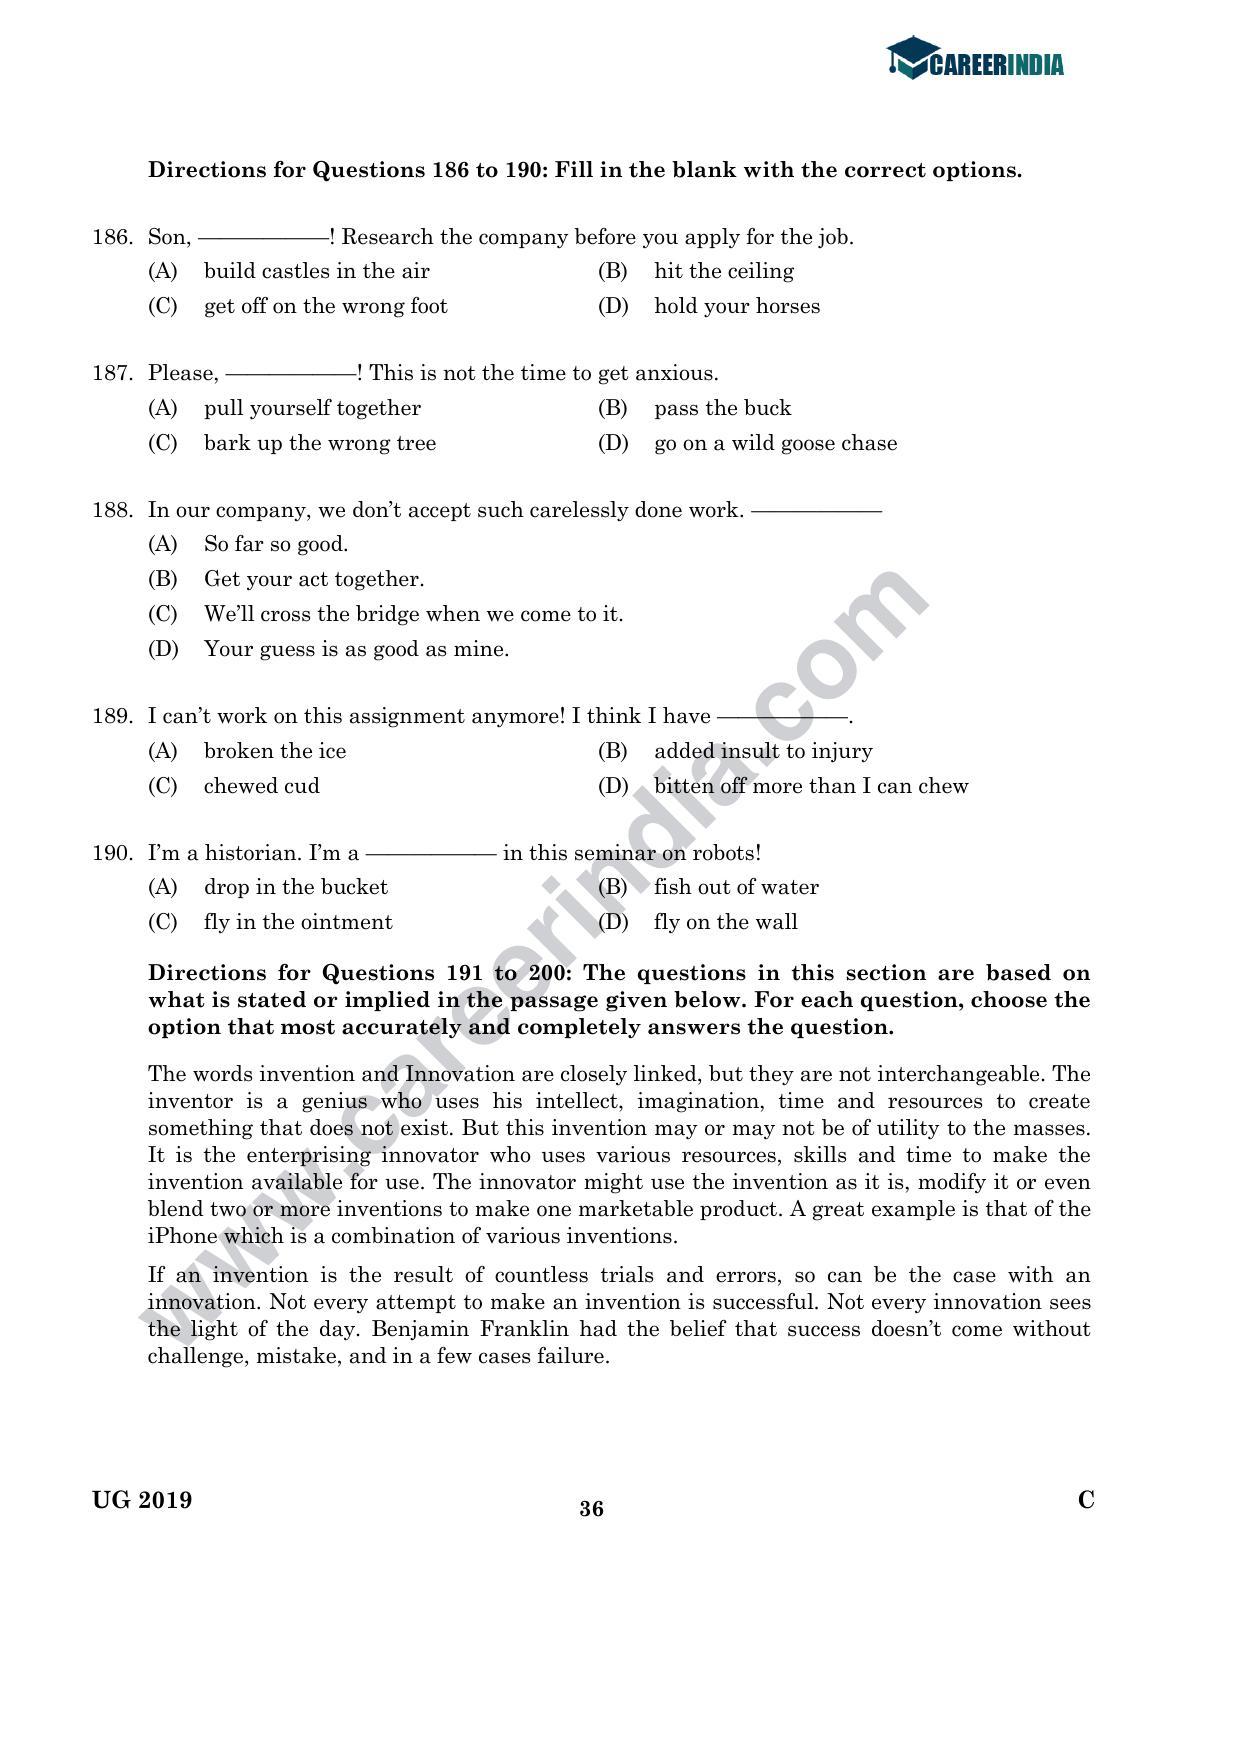 CLAT 2019 UG Legal-Aptitude Question Paper - Page 35